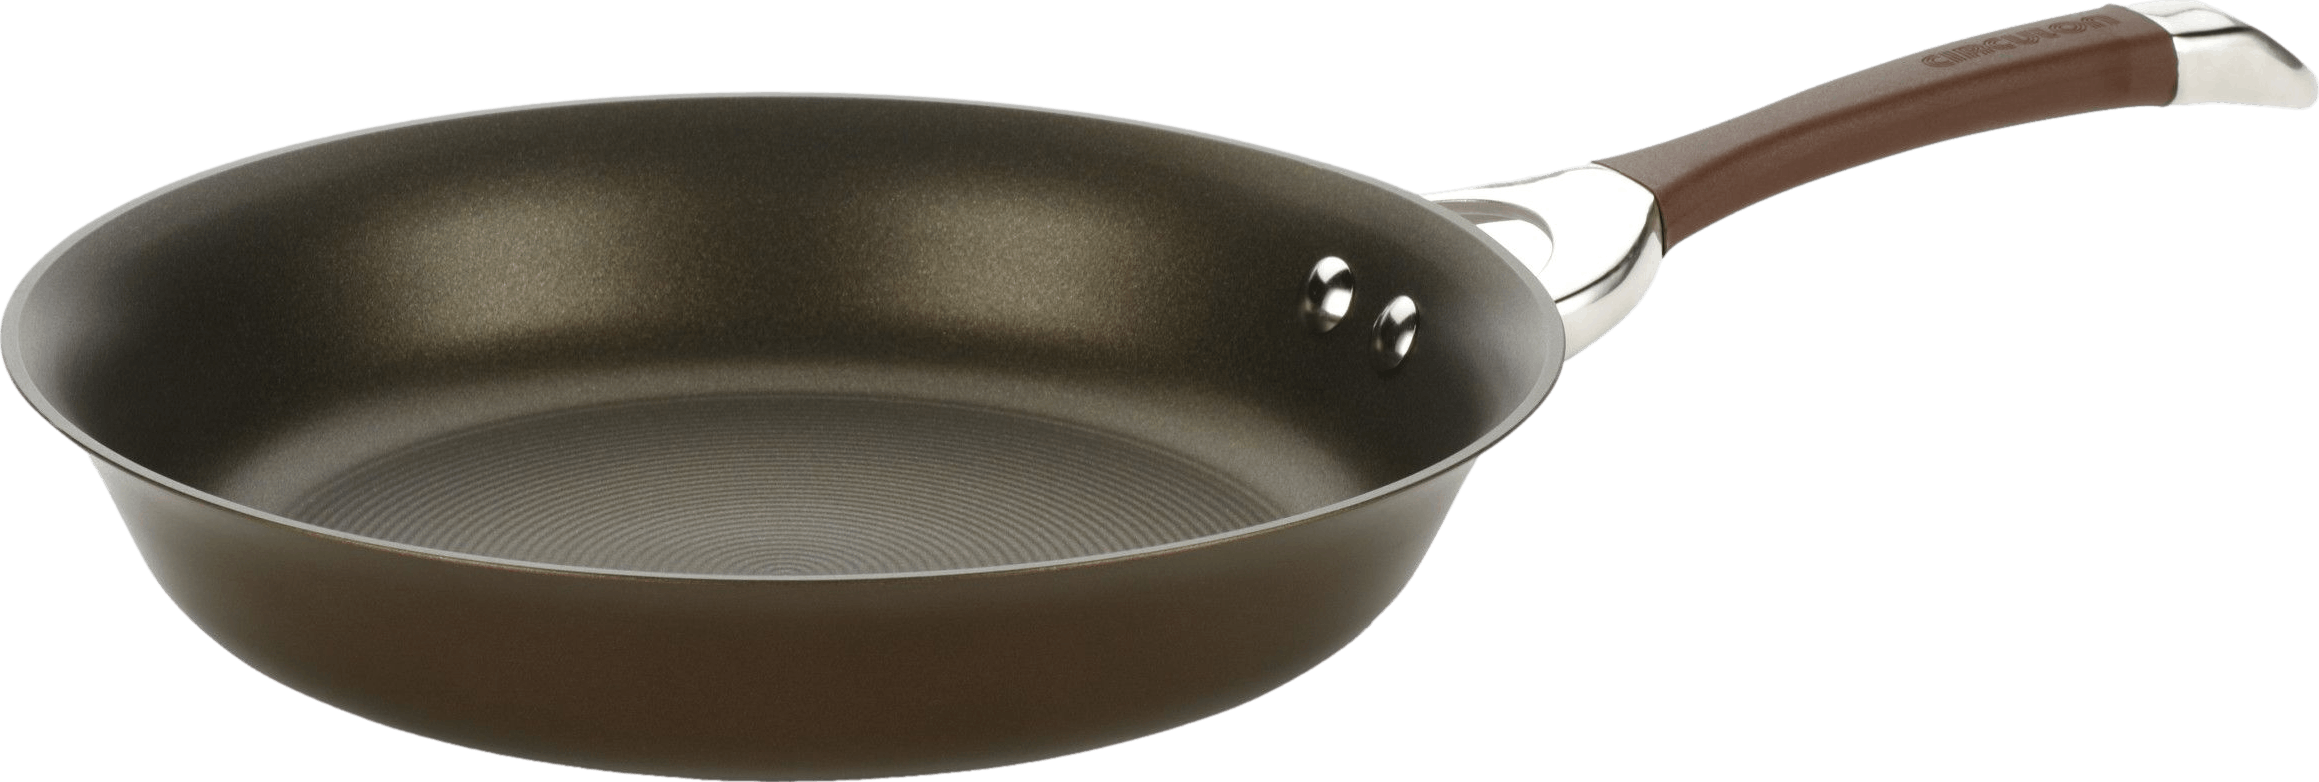 Circulon Elementum Hard-Anodized Nonstick Frying Pan with Helper